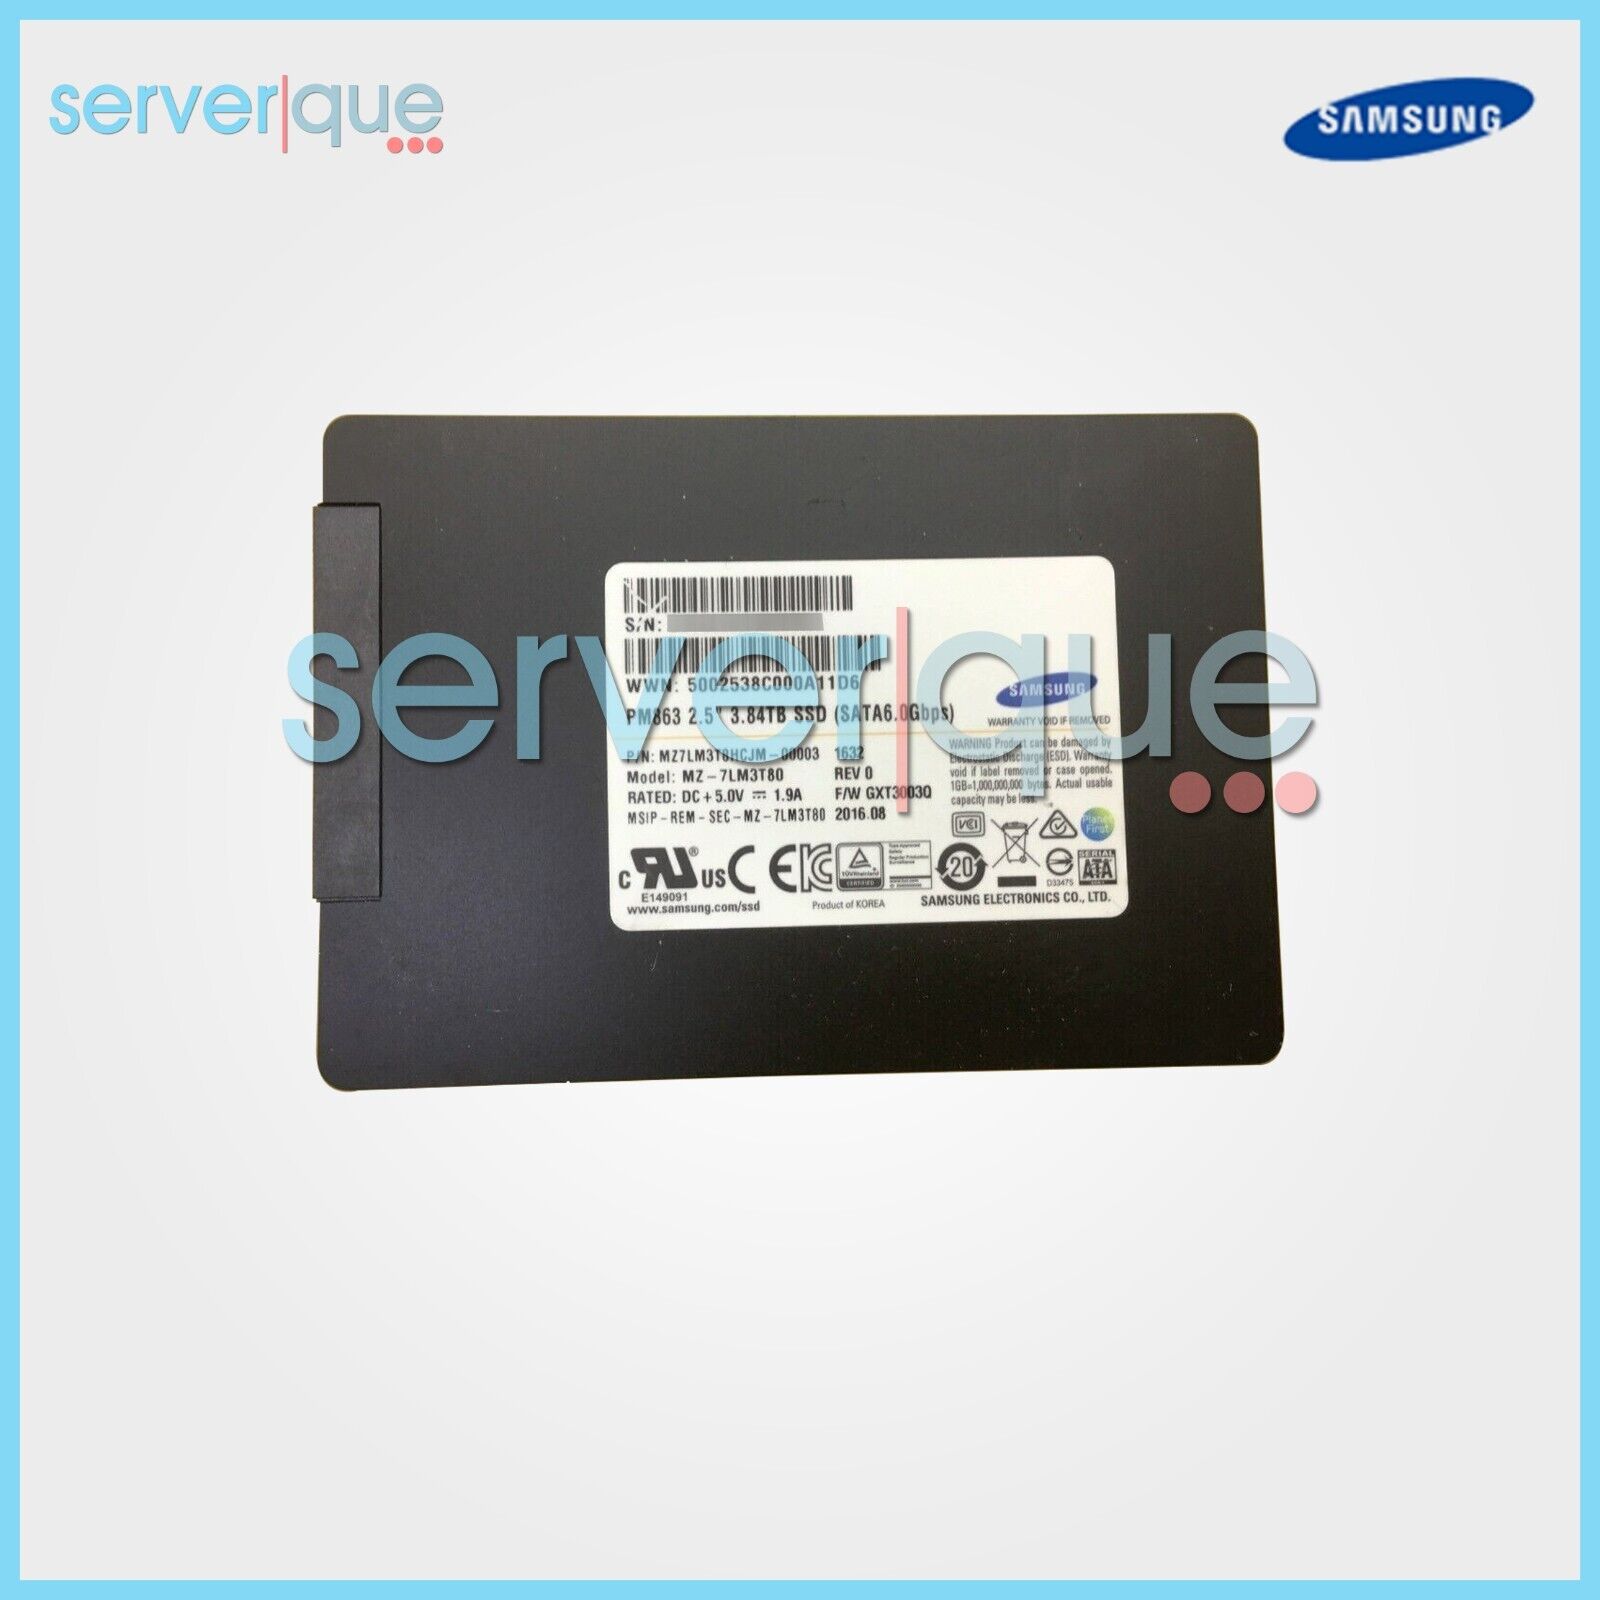 MZ-7LM3T80 Samsung PM863 3.84TB 6Gbps SATA 2.5\